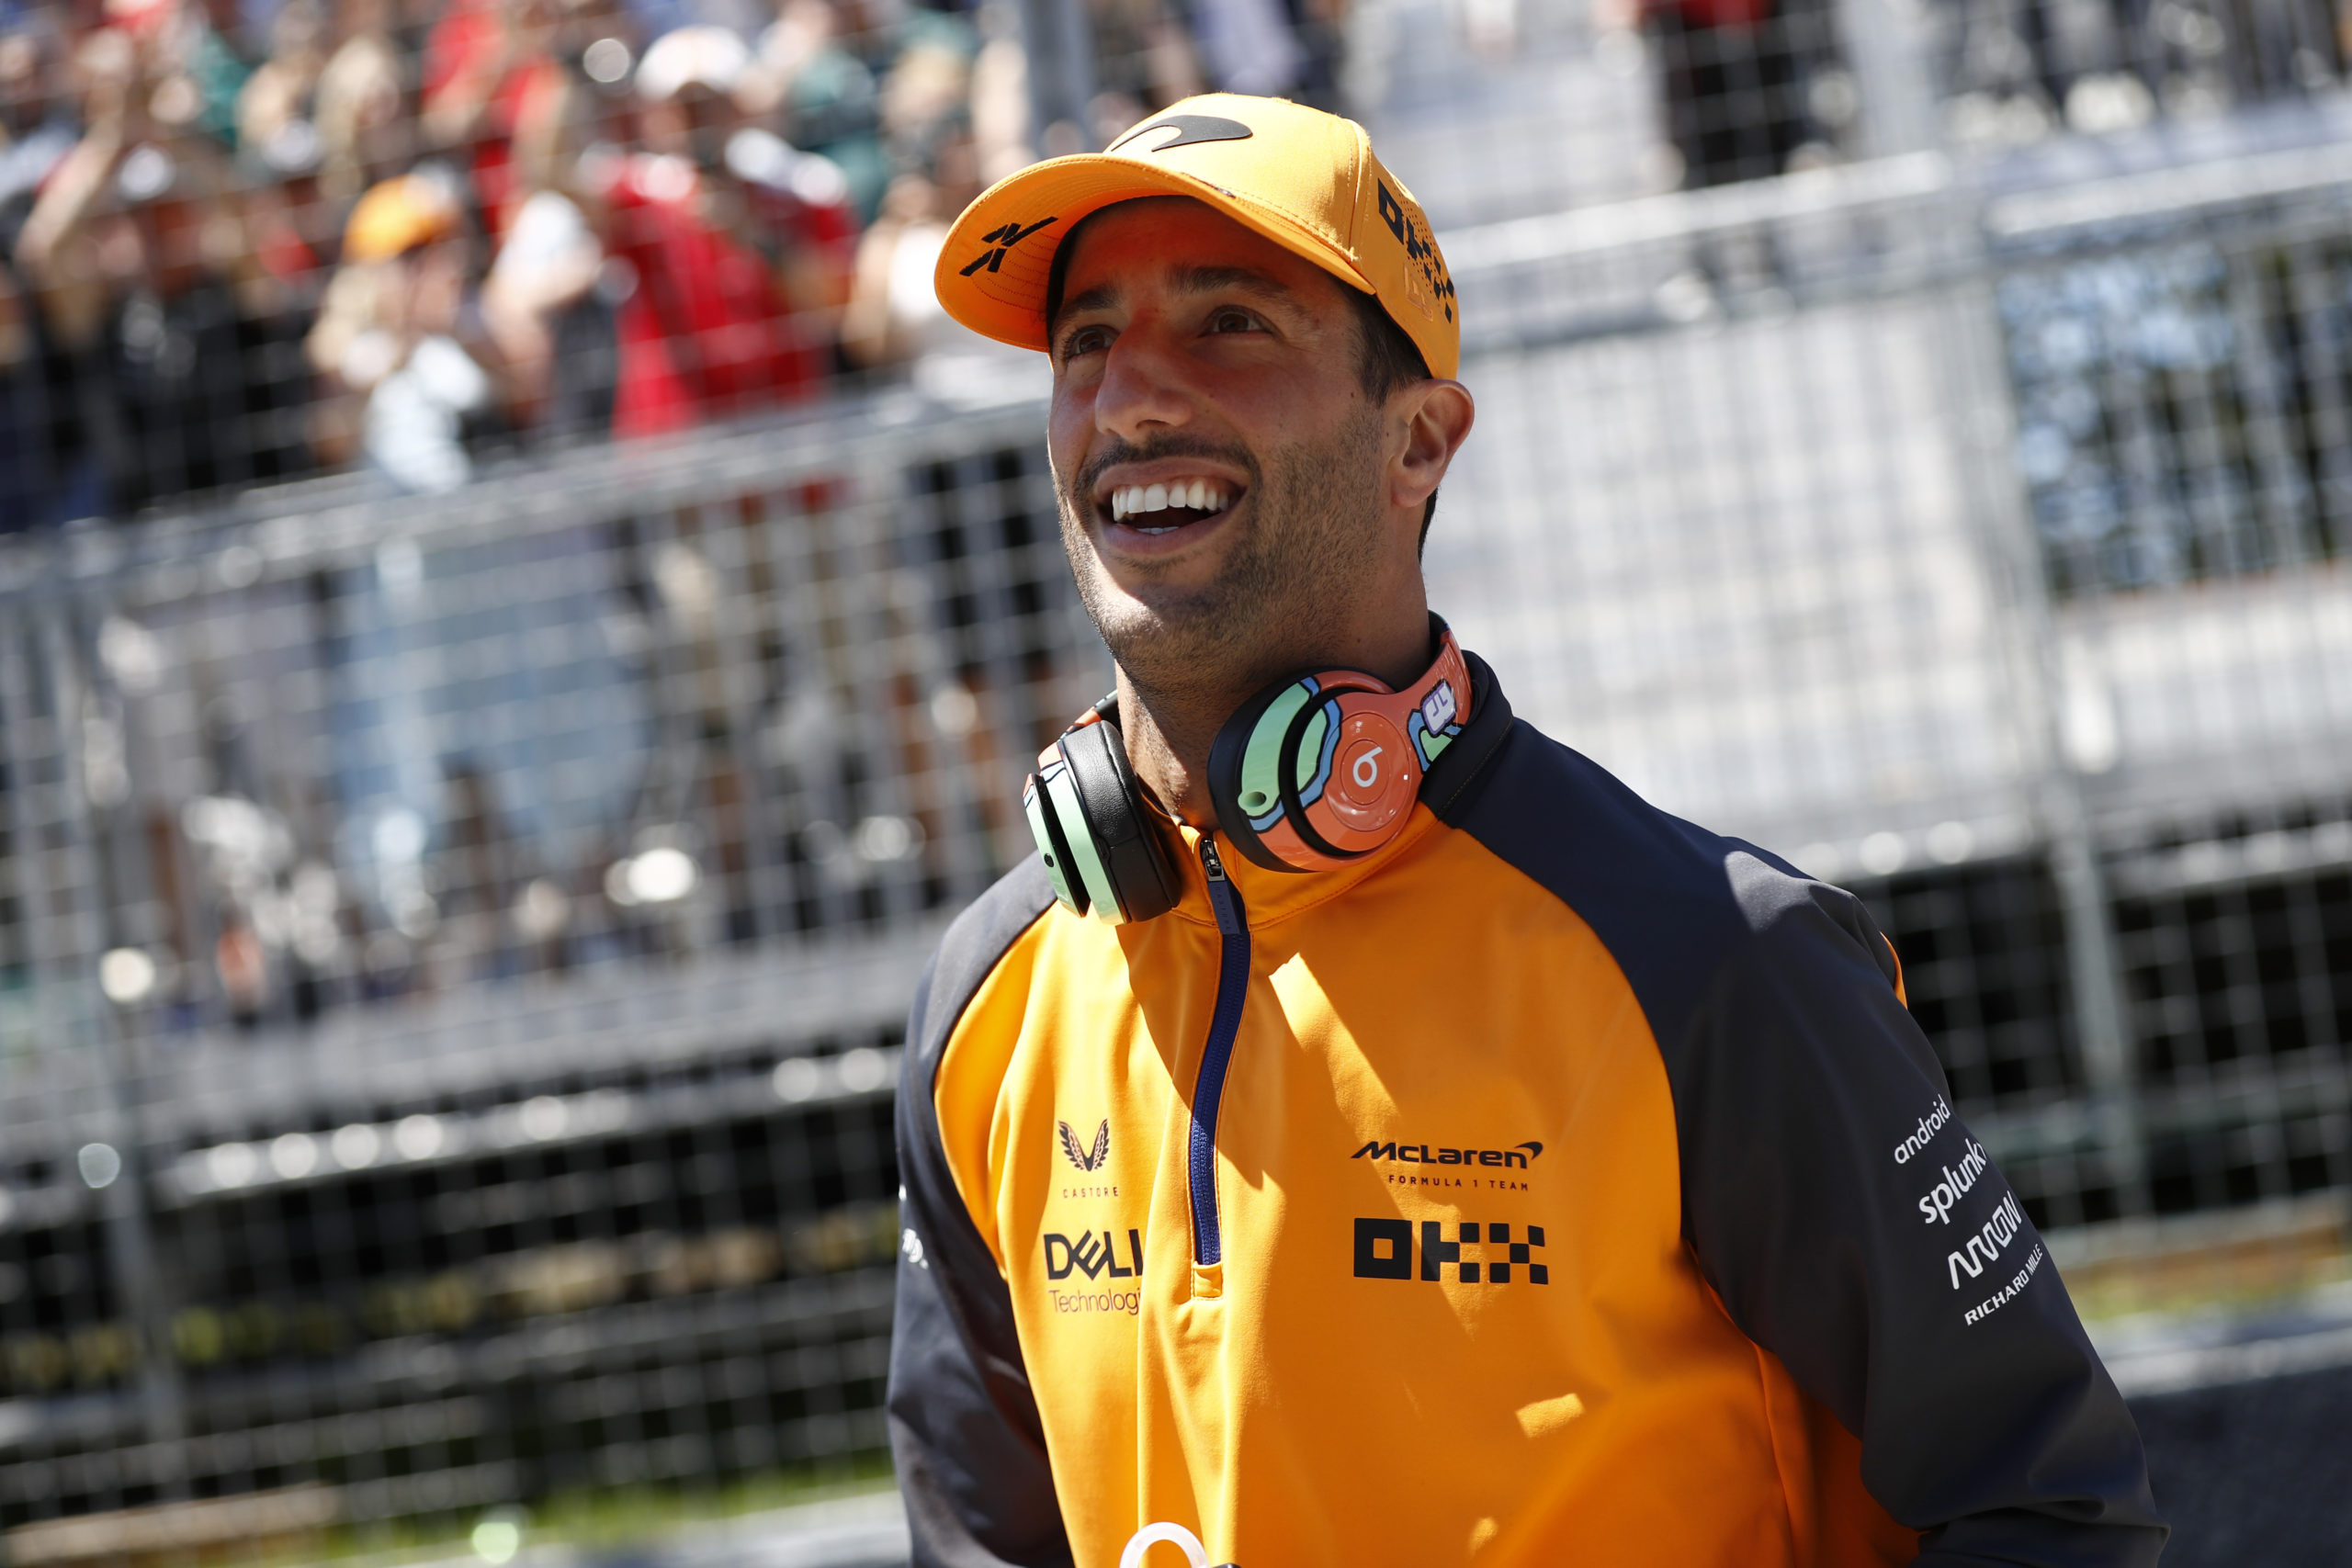 Keeping up with Ricciardos?  Hulu has teamed up with Ricciardo on a screenplay series